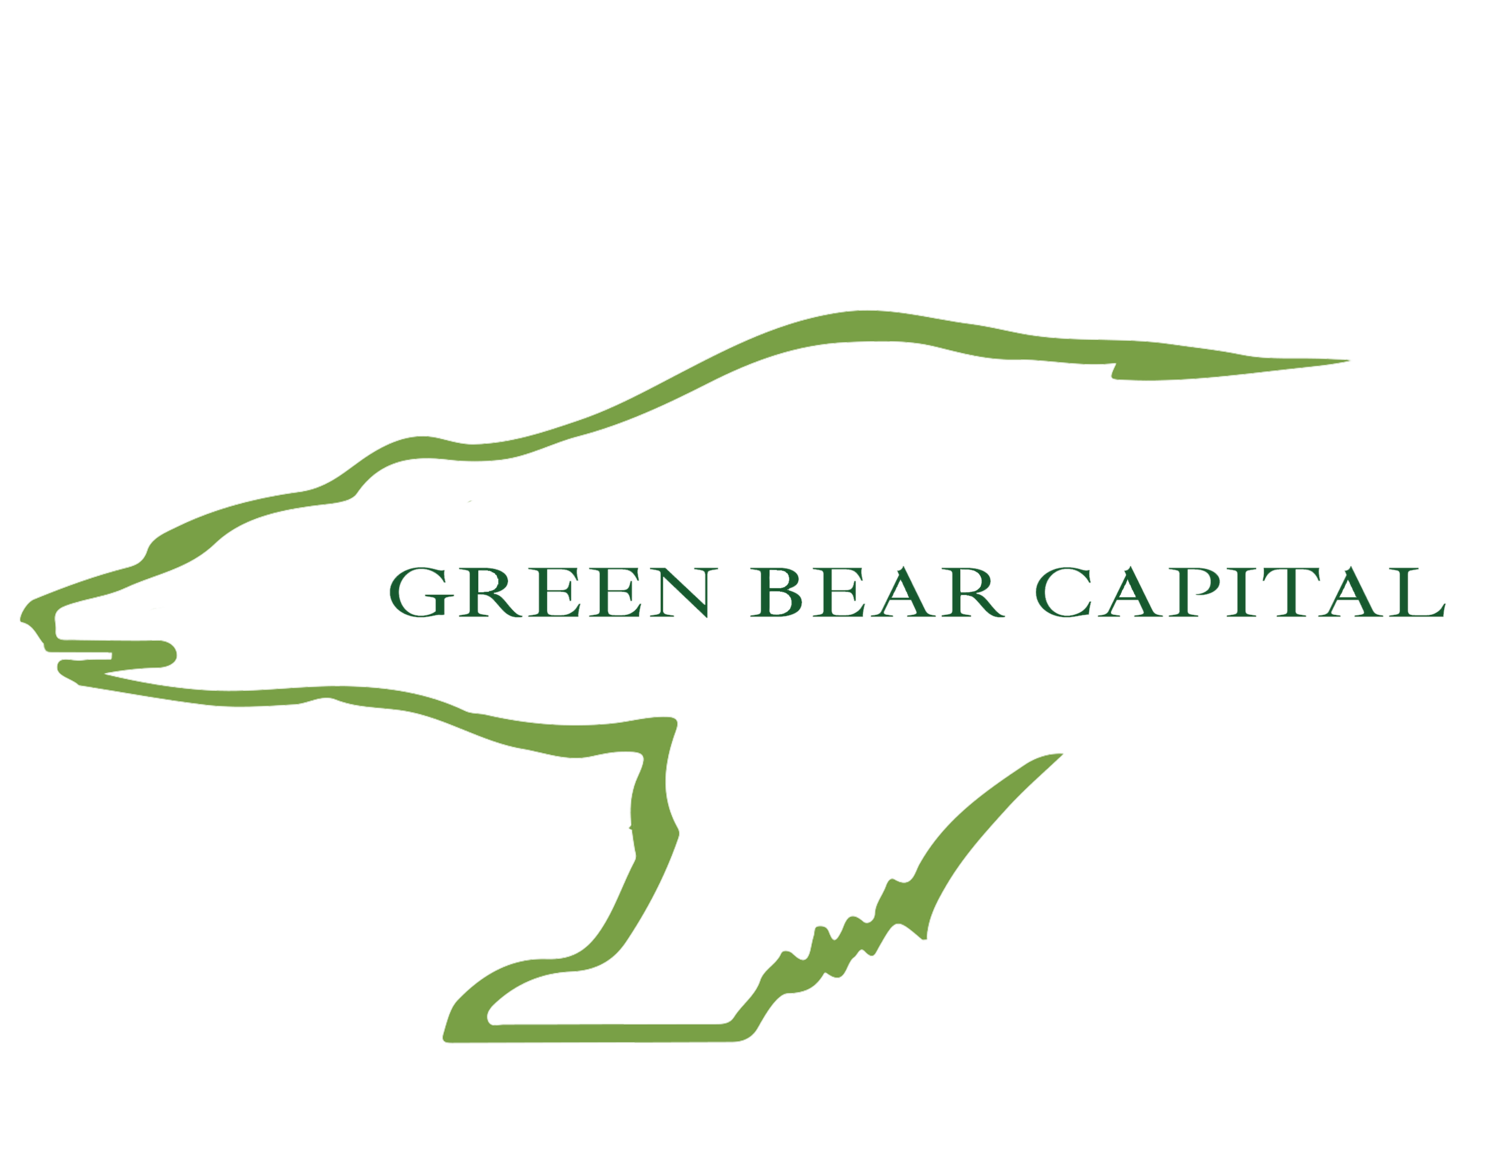 GREEN BEAR CAPITAL